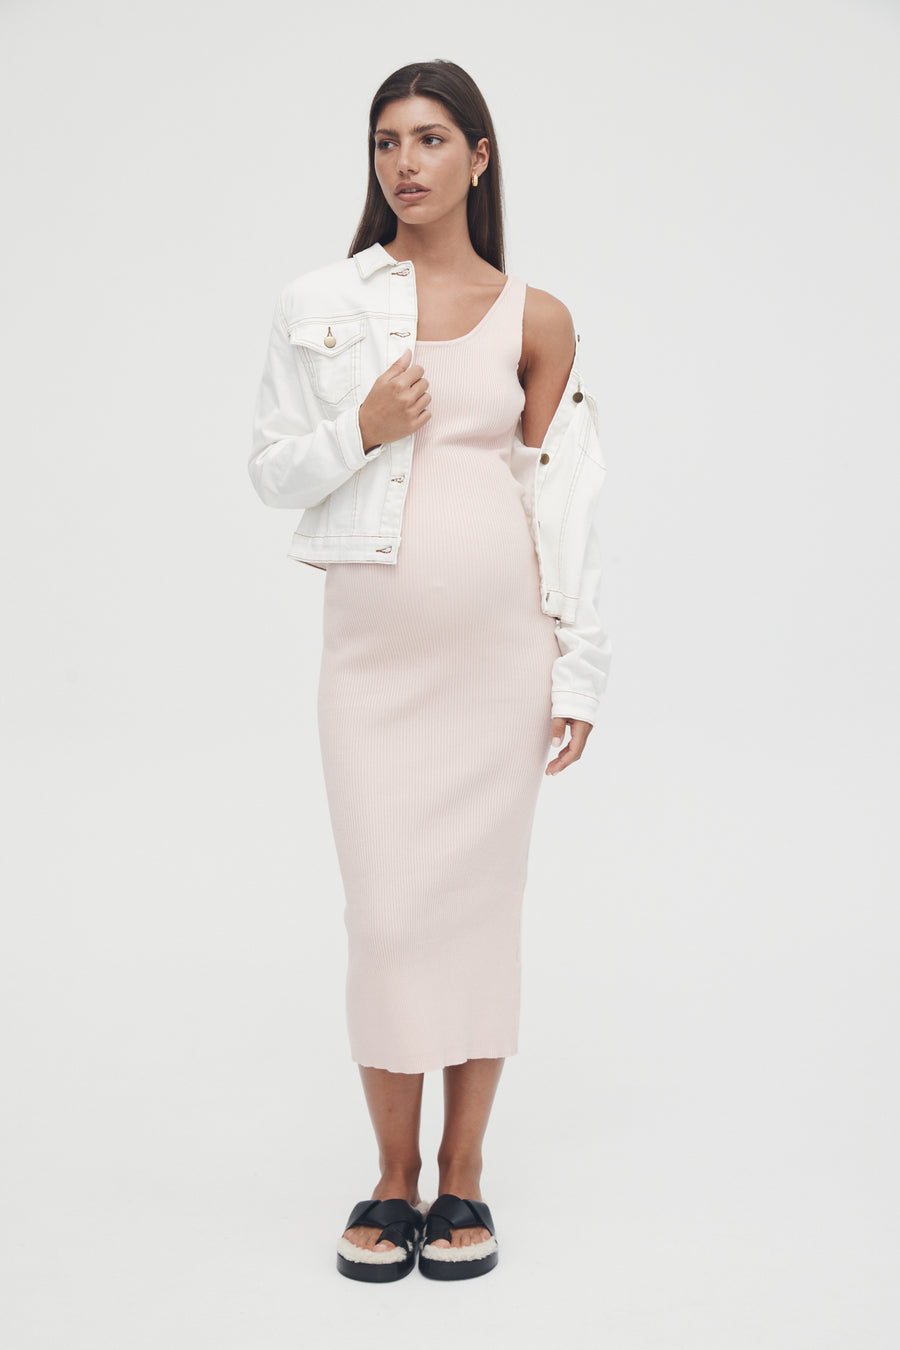 Stretchy Rib Knit Maternity Dress (Pink) 4